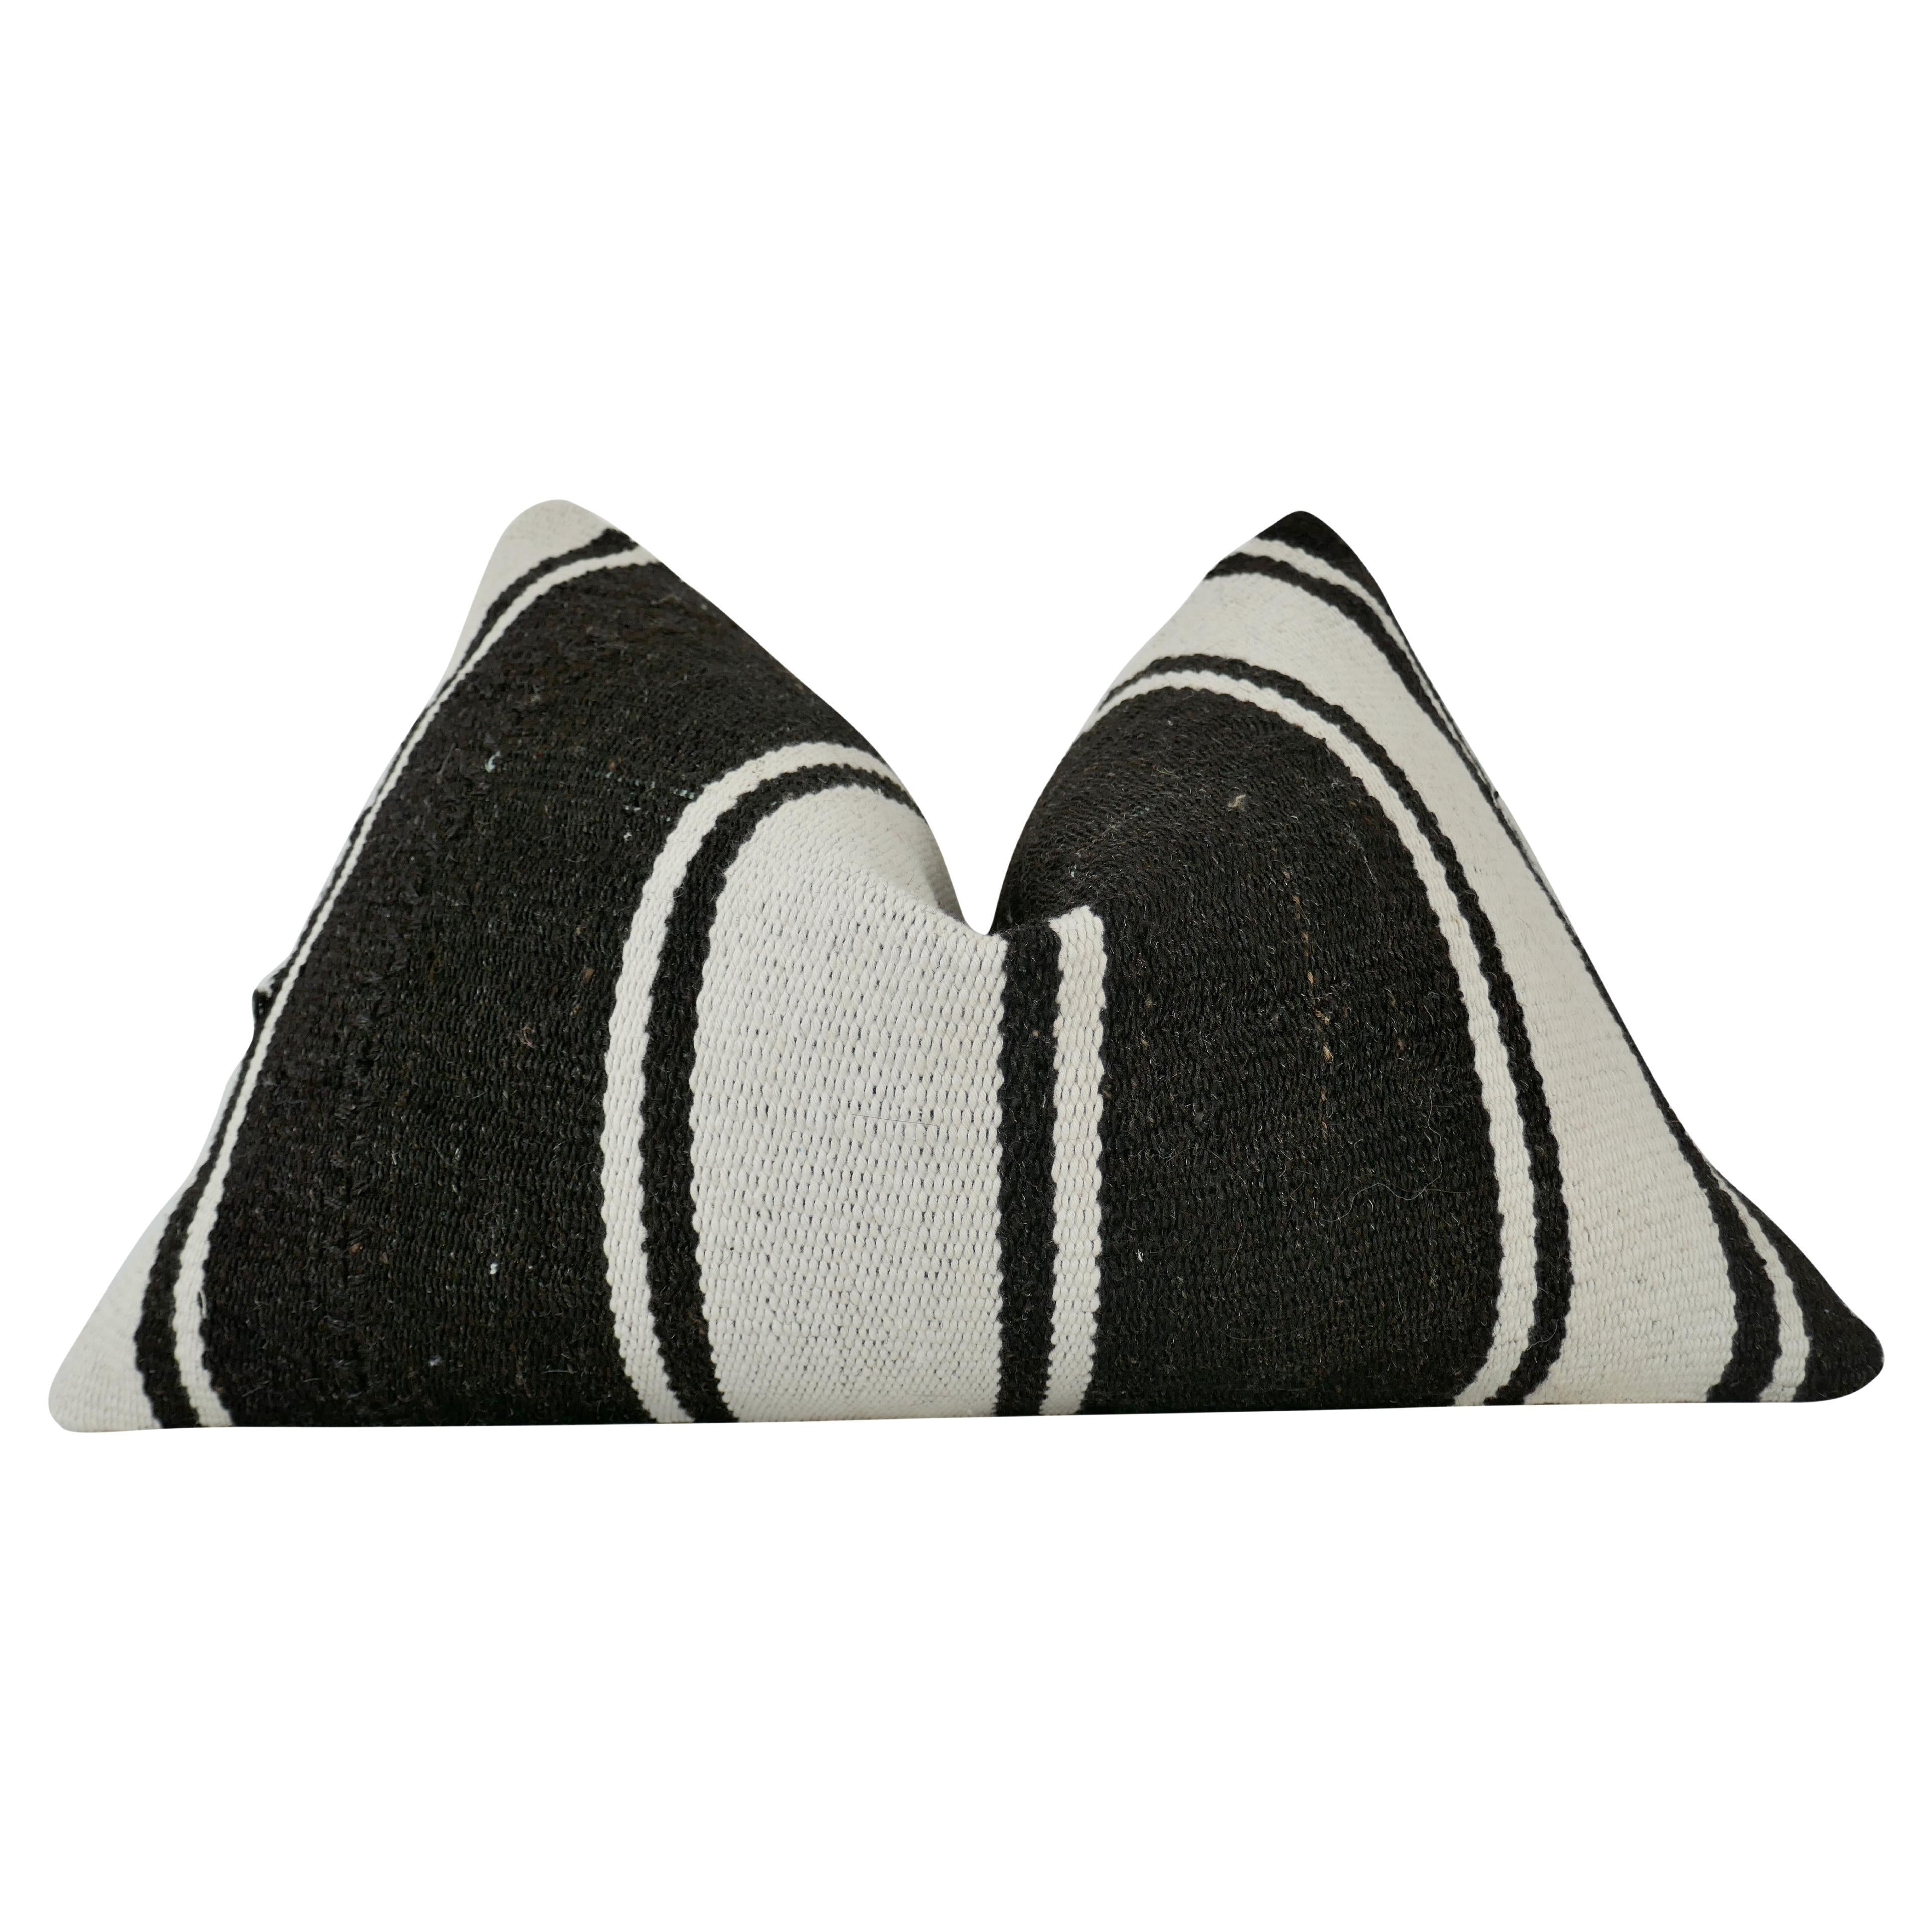 Vintage Berber Tribal Hand-Woven Kilim Hemp/Wool Pillow For Sale